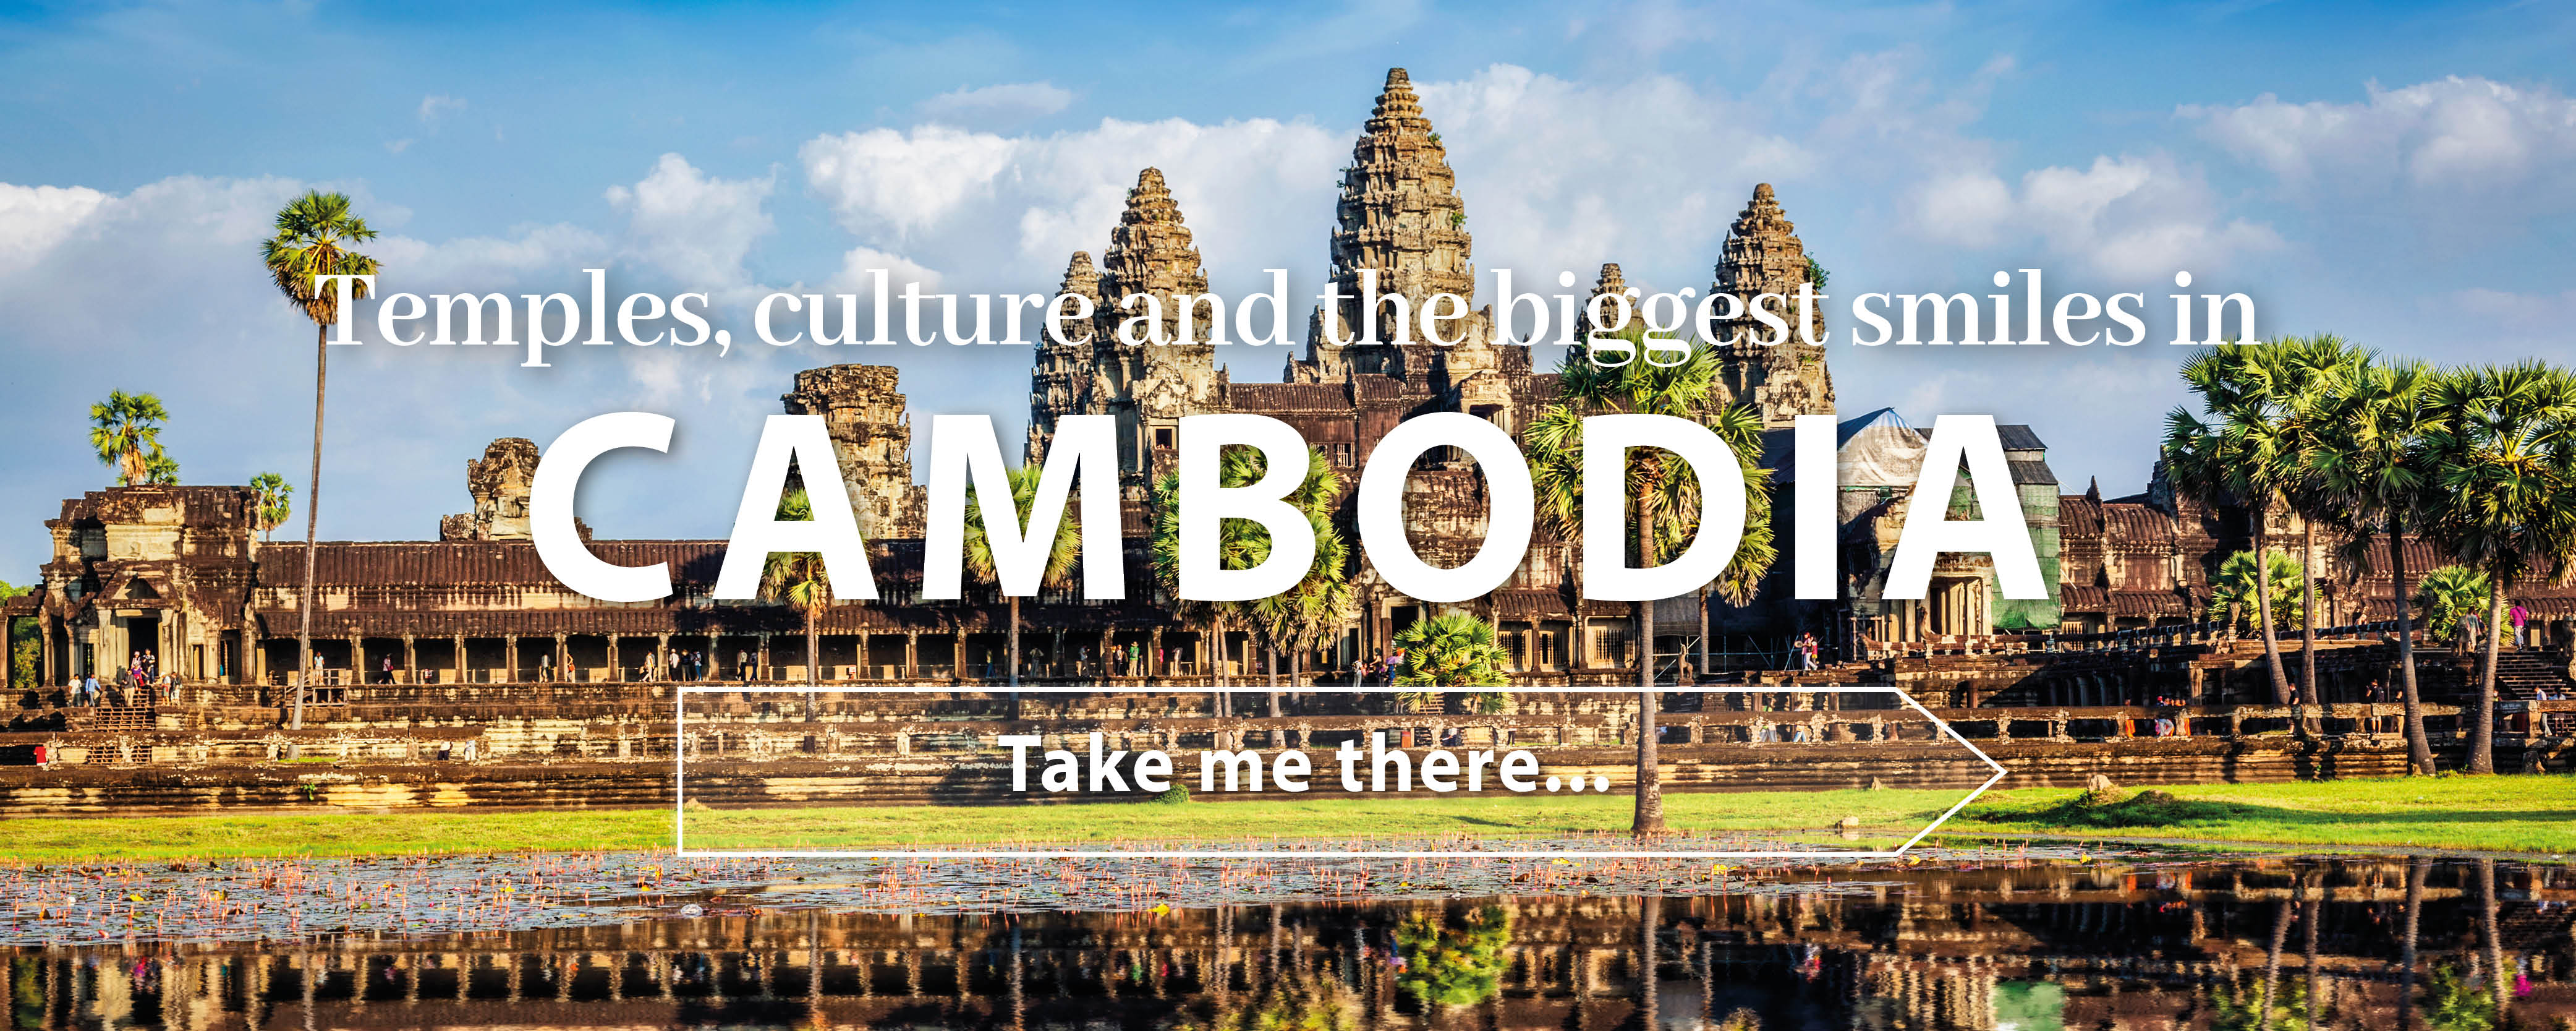 test free travel destinations Cambodia